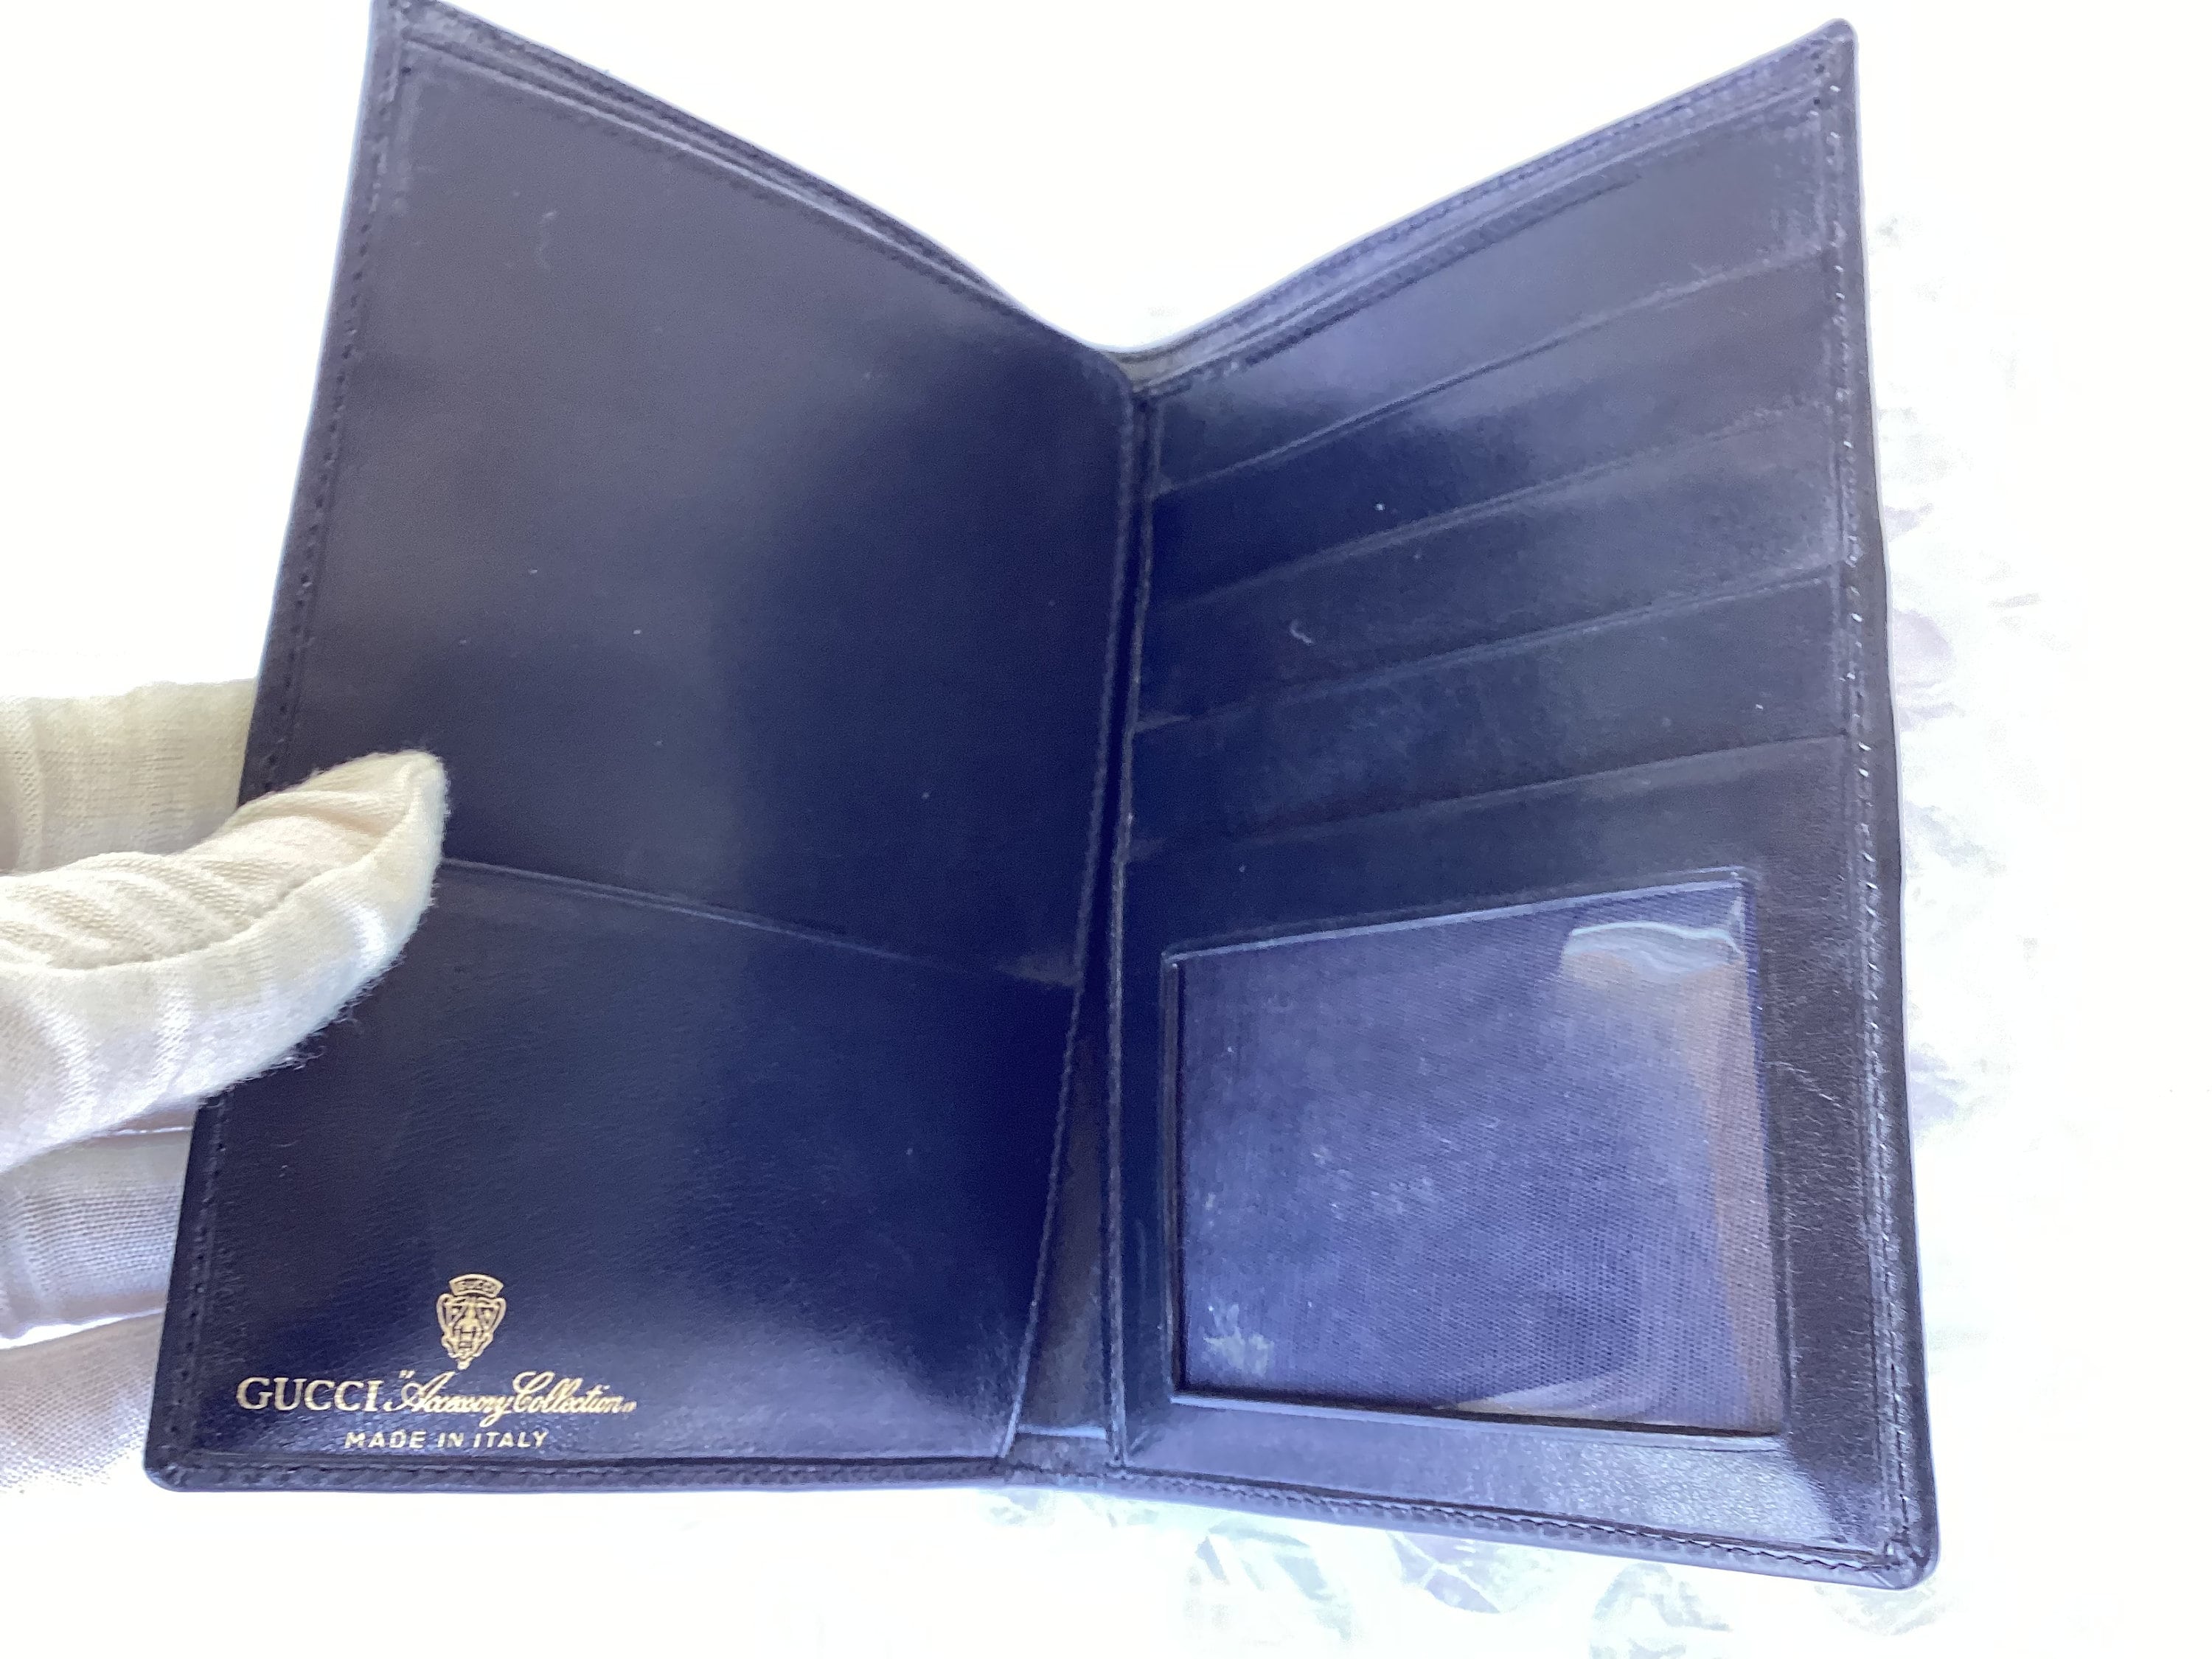 Vintage Old Gucci Passport Holder Wallet Web Brown Canvas 